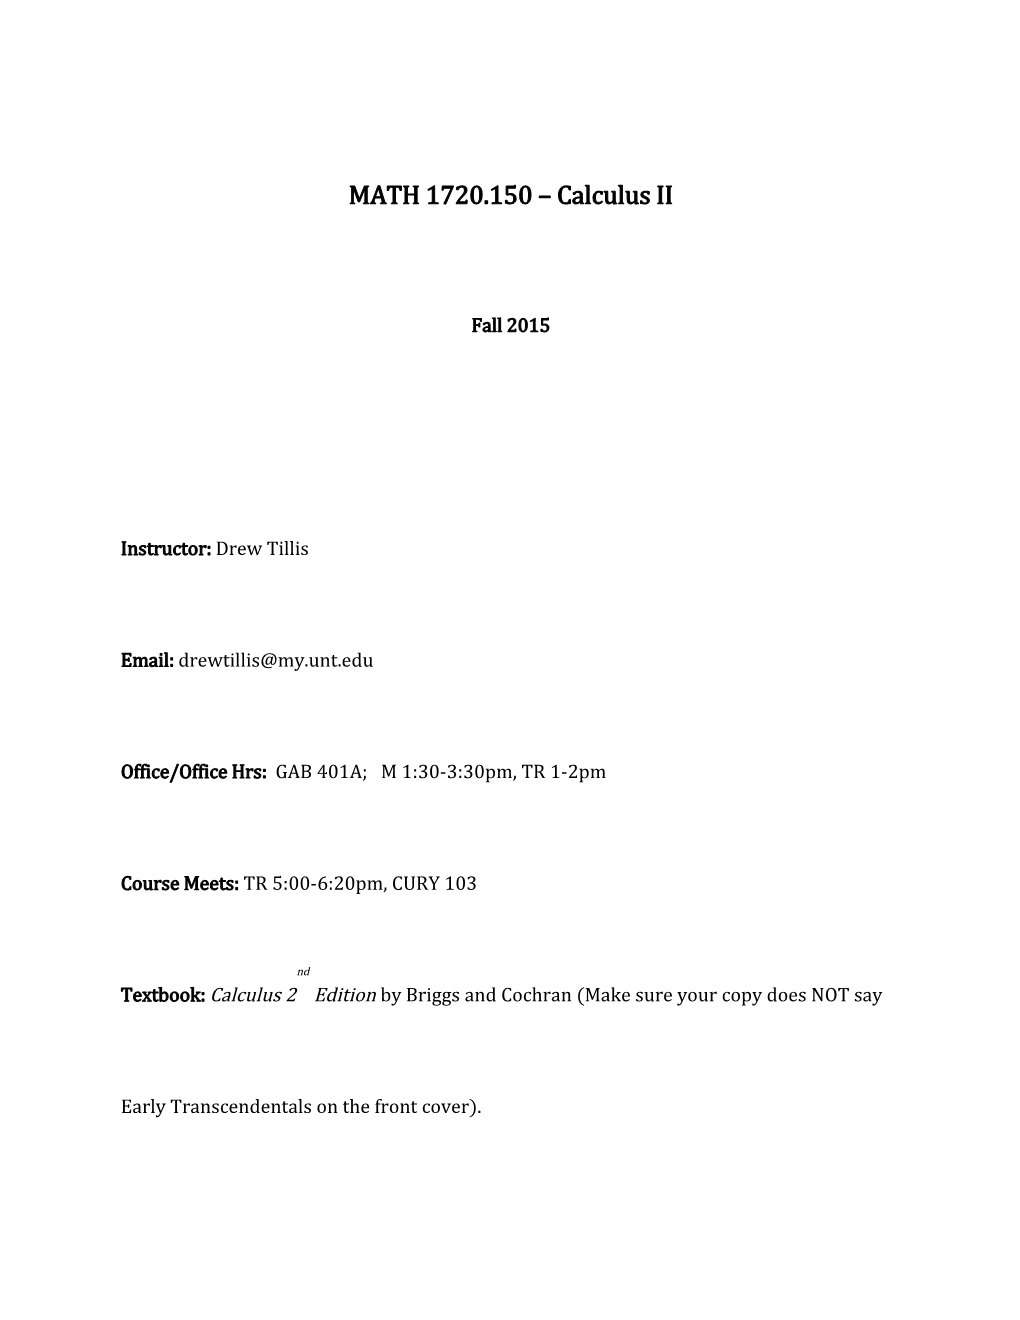 MATH 1720.150 Calculus II